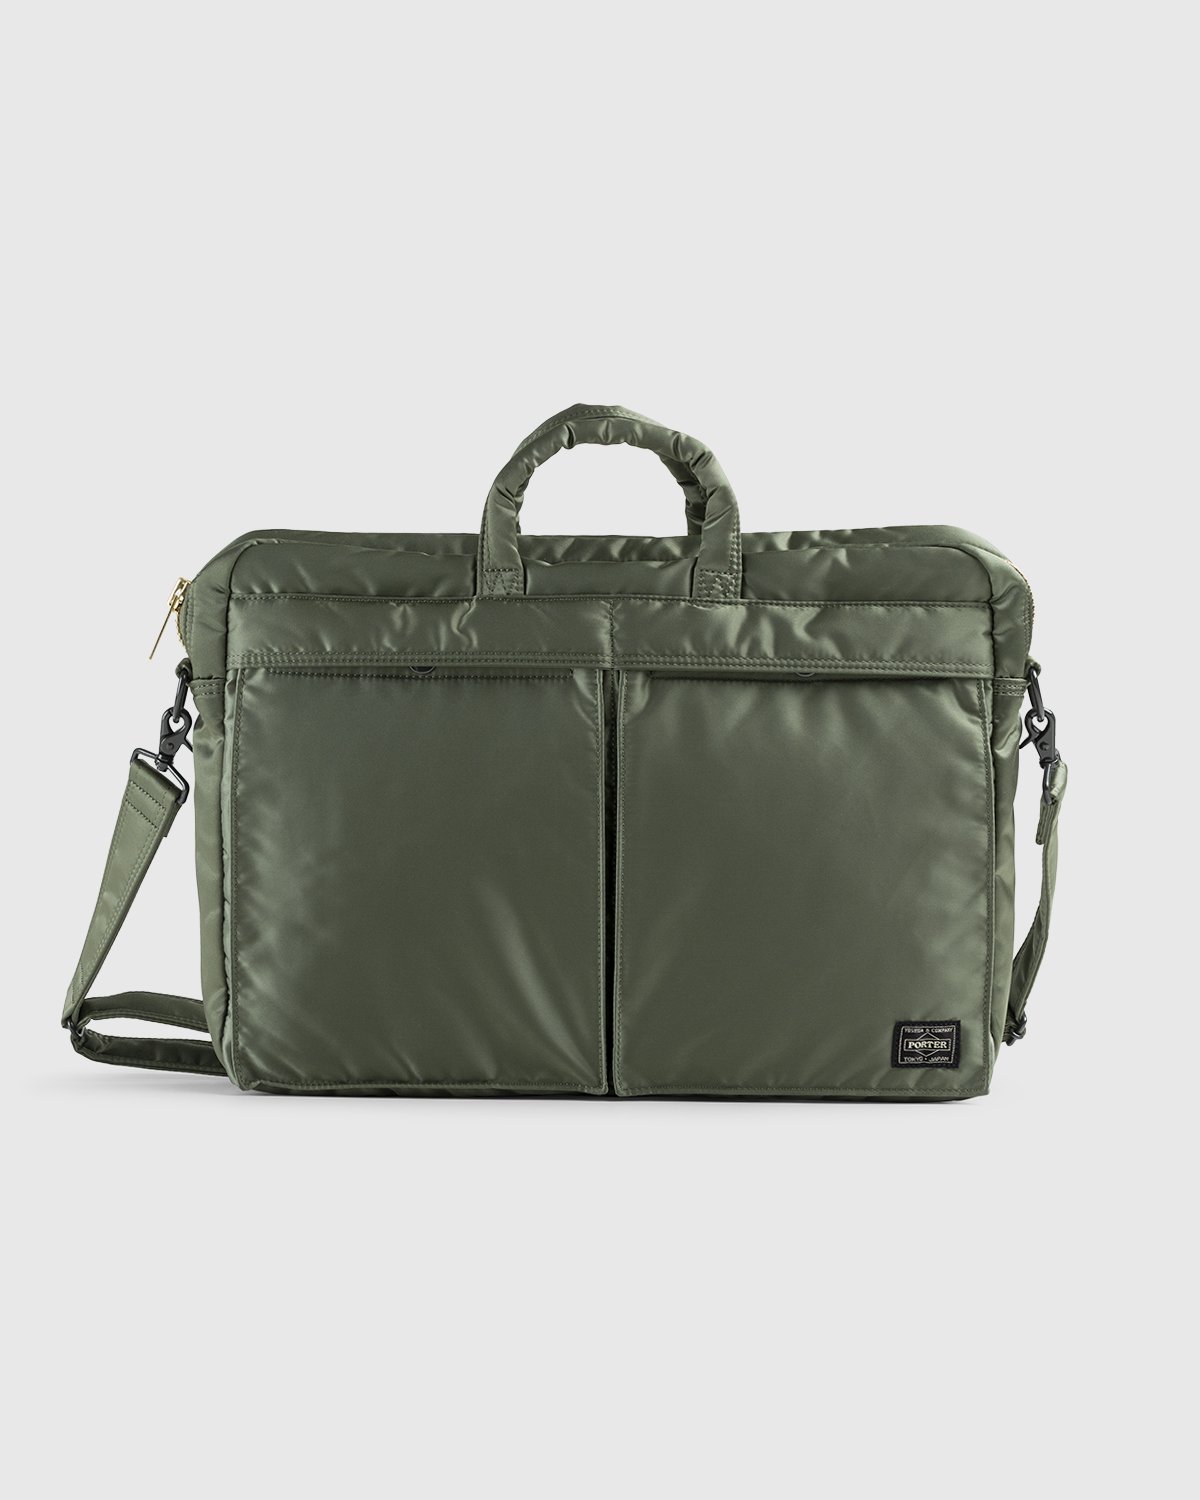 Porter-Yoshida & Co. - Tanker 2-Way Briefcase Sage Green - Accessories - Green - Image 1